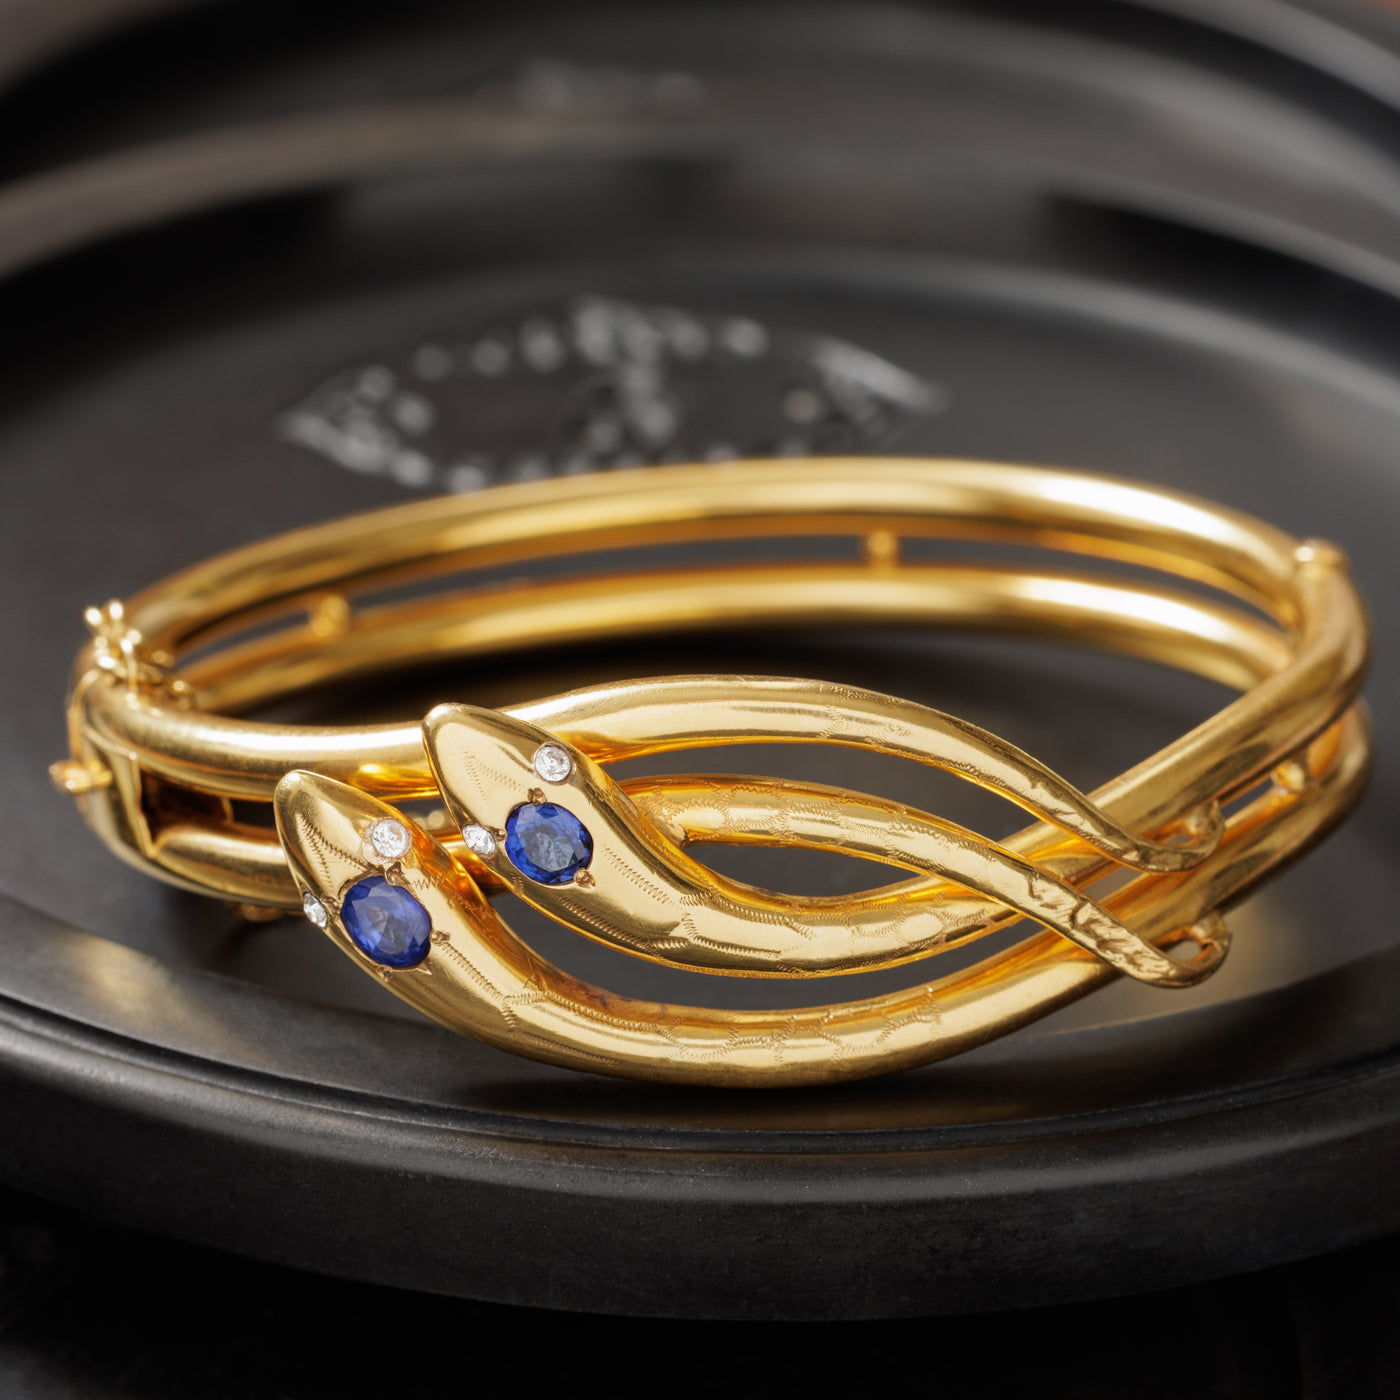 19th Century French 18 Karat Gold Diamond and Sapphire Double Snake Bracelet Bangle